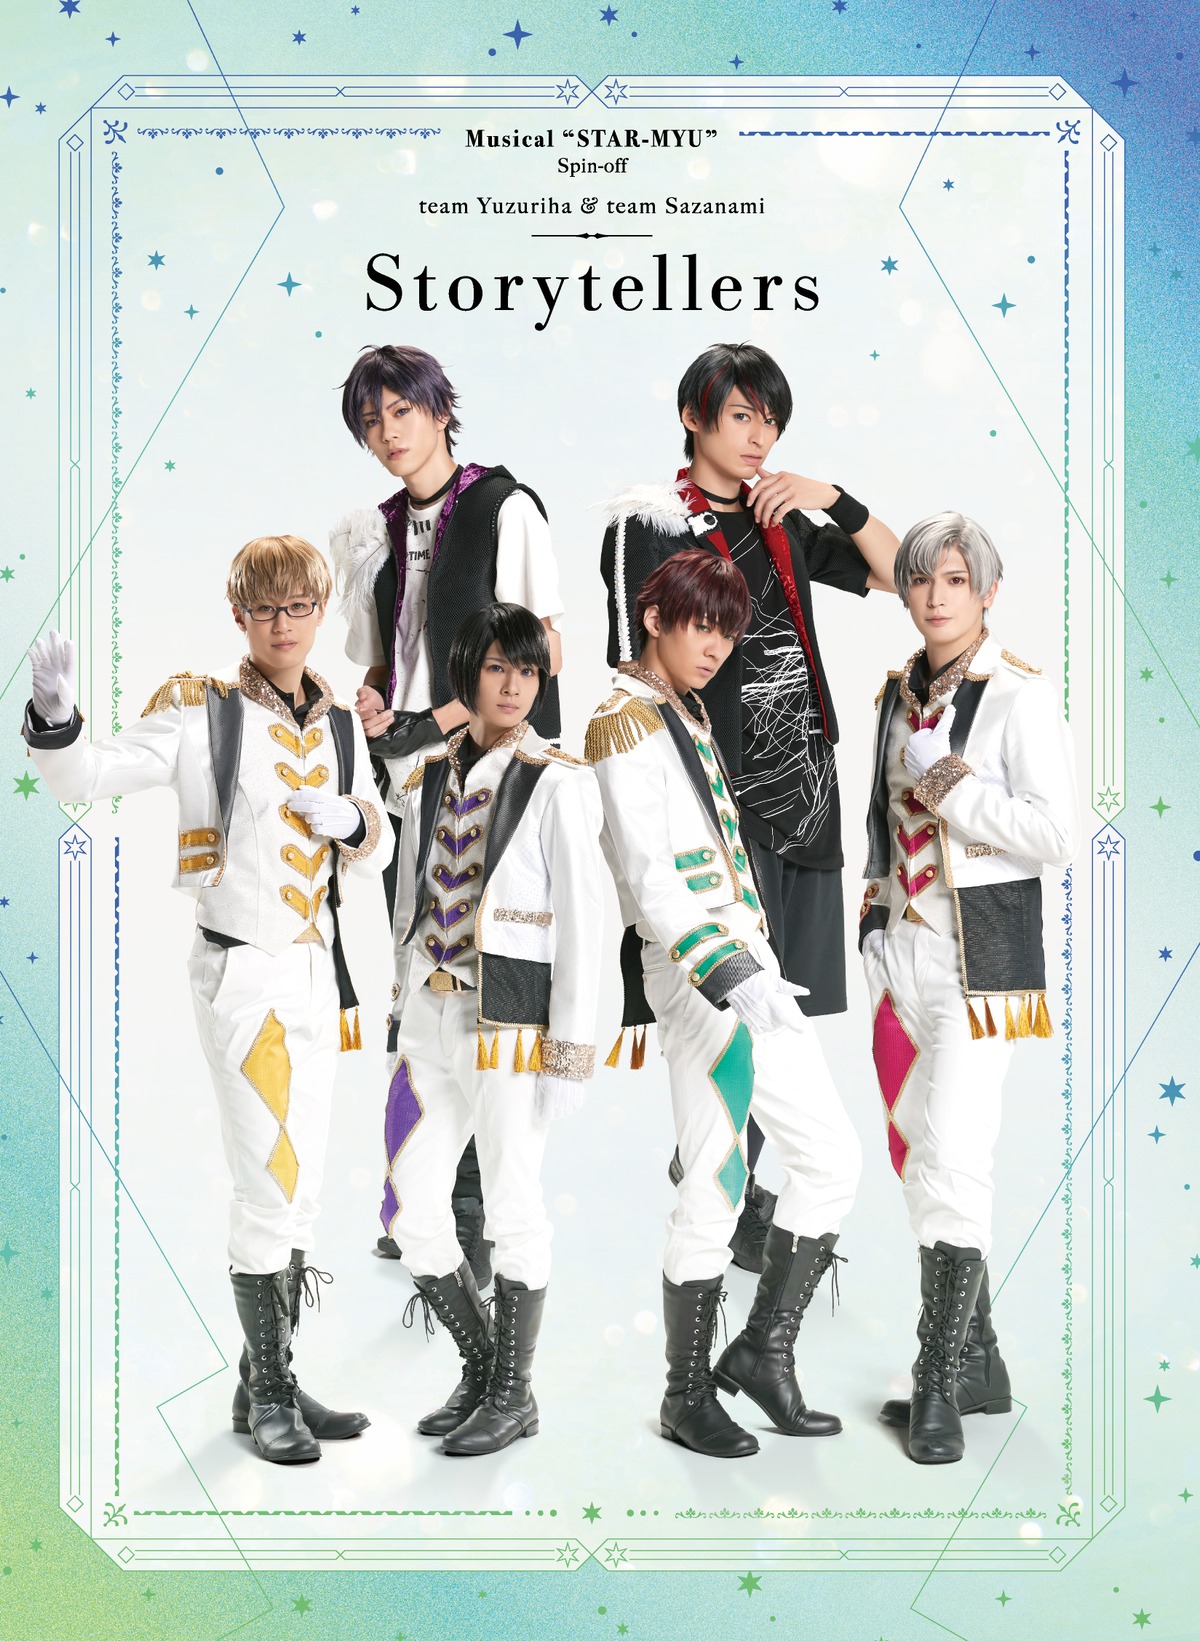 Storytellers ミュージカル スタミュ スピンオフ Team楪 Team漣 単独公演 Storytellers Blu Ray Polygonmagic Stage Online Store